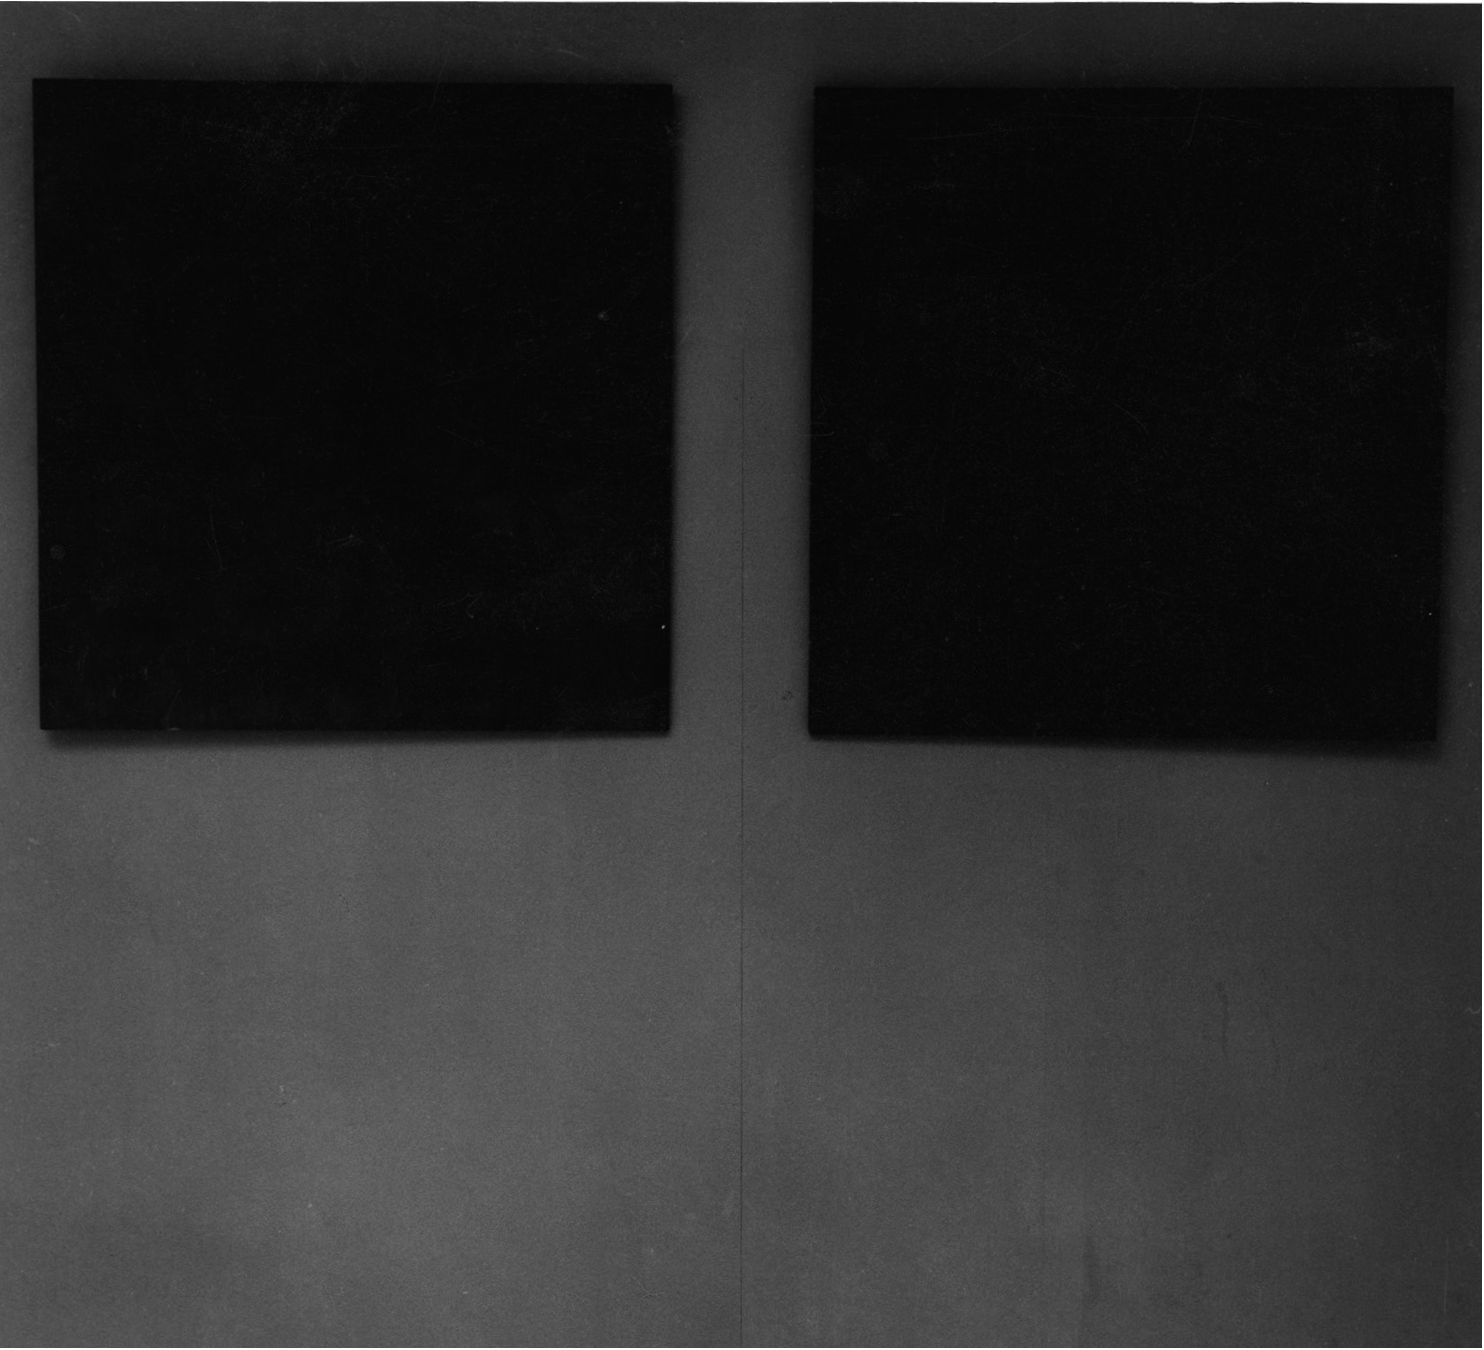 Catherine Christer Hennix, Ultra-Black Paintings, installation view, Moderna Museet, Stockholm, 1976.